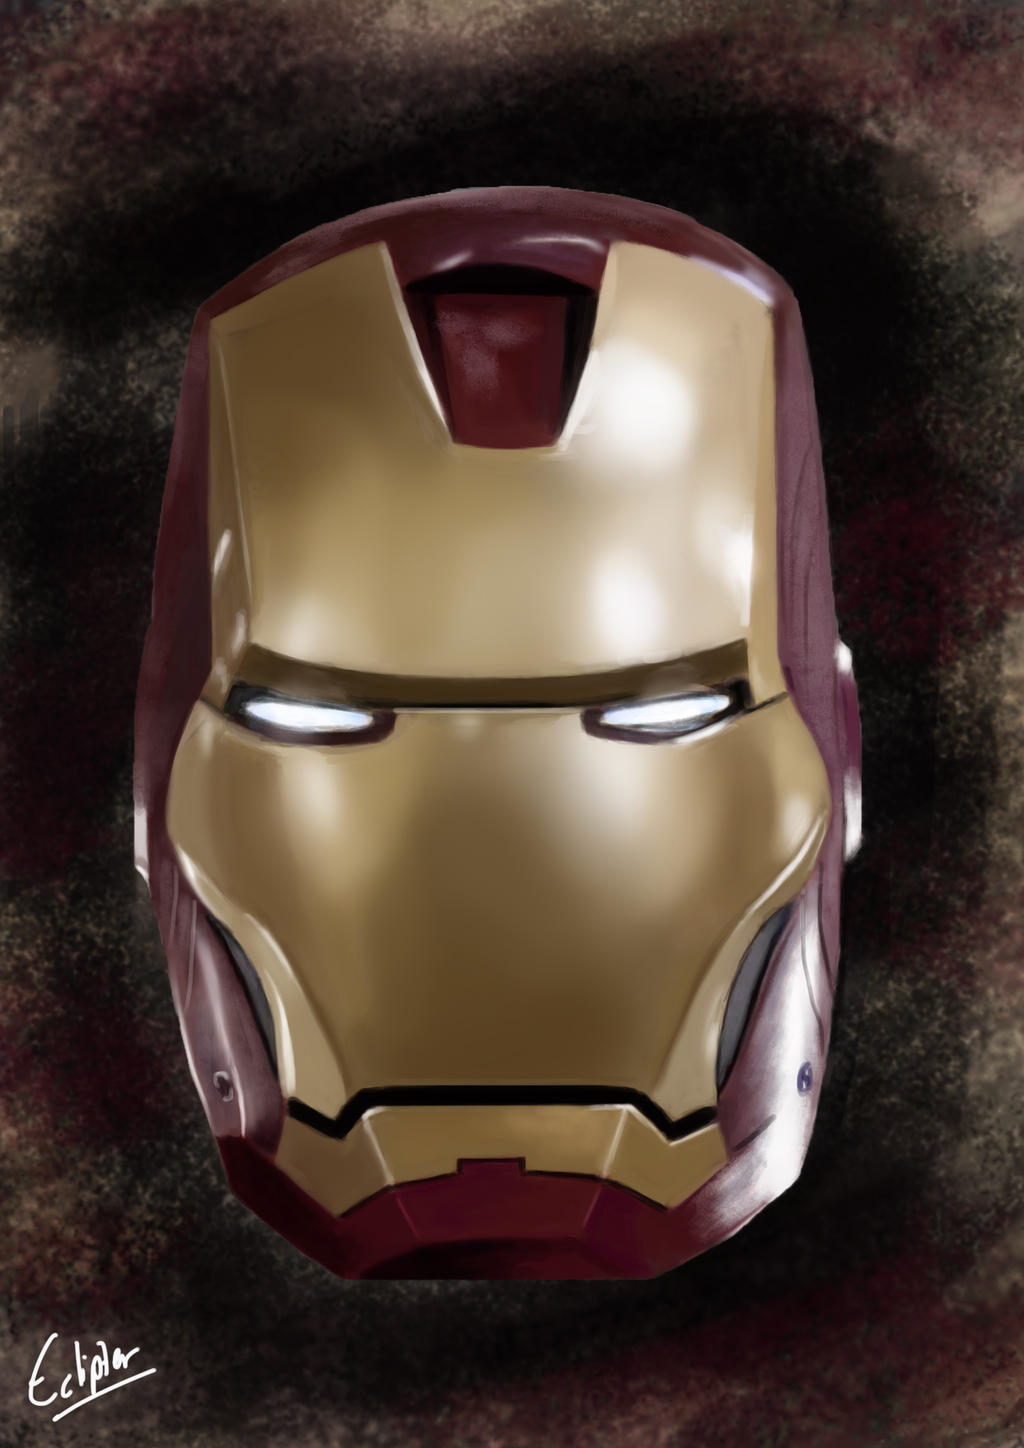 iron-man-helmet-by-eclipter-on-deviantart